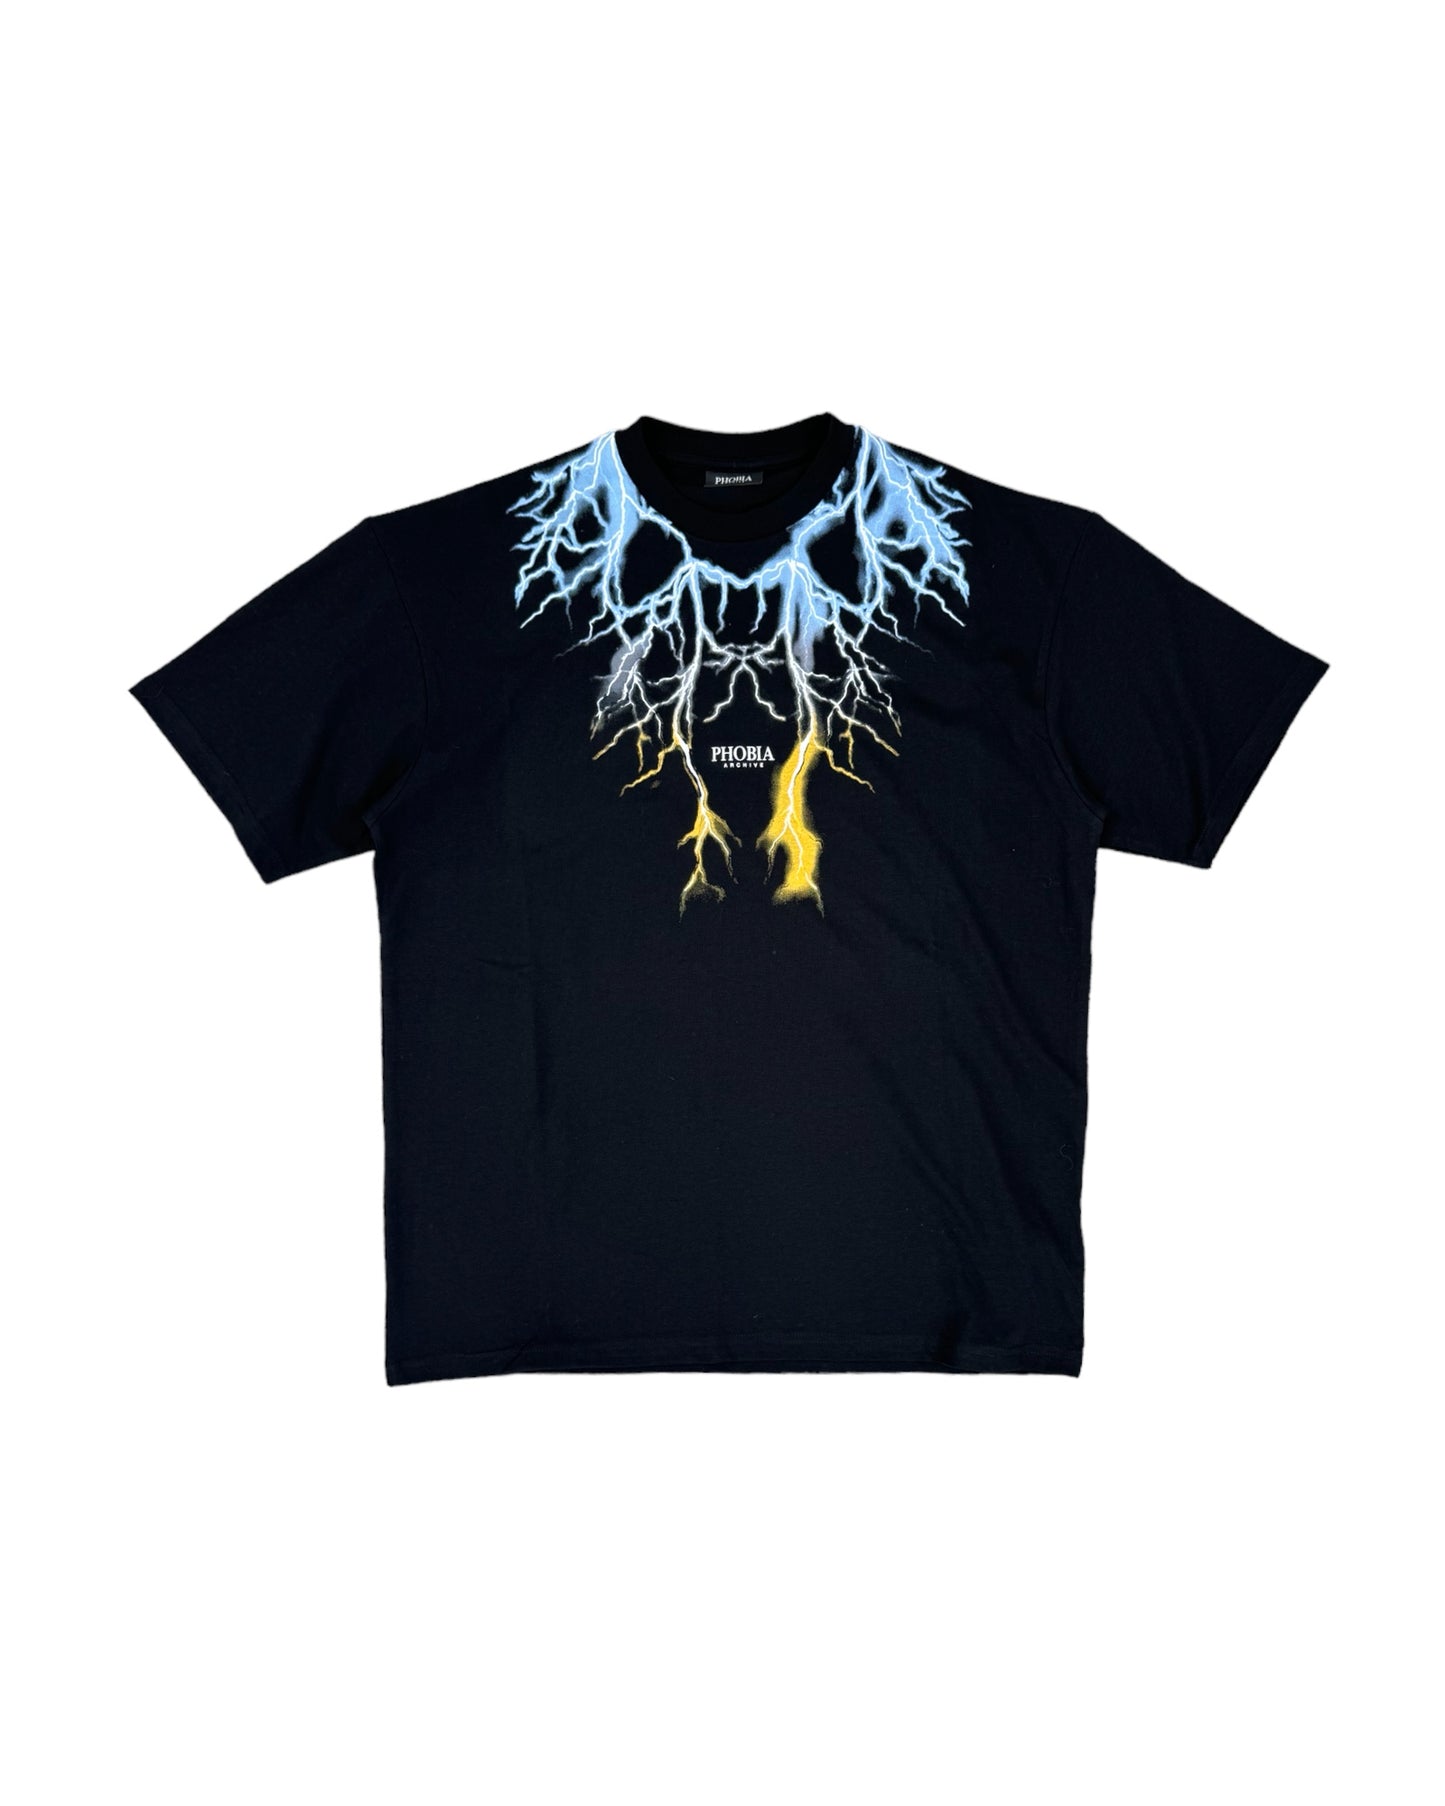 Phobia T-shirt Nera con Fulmini Blu-Giallo